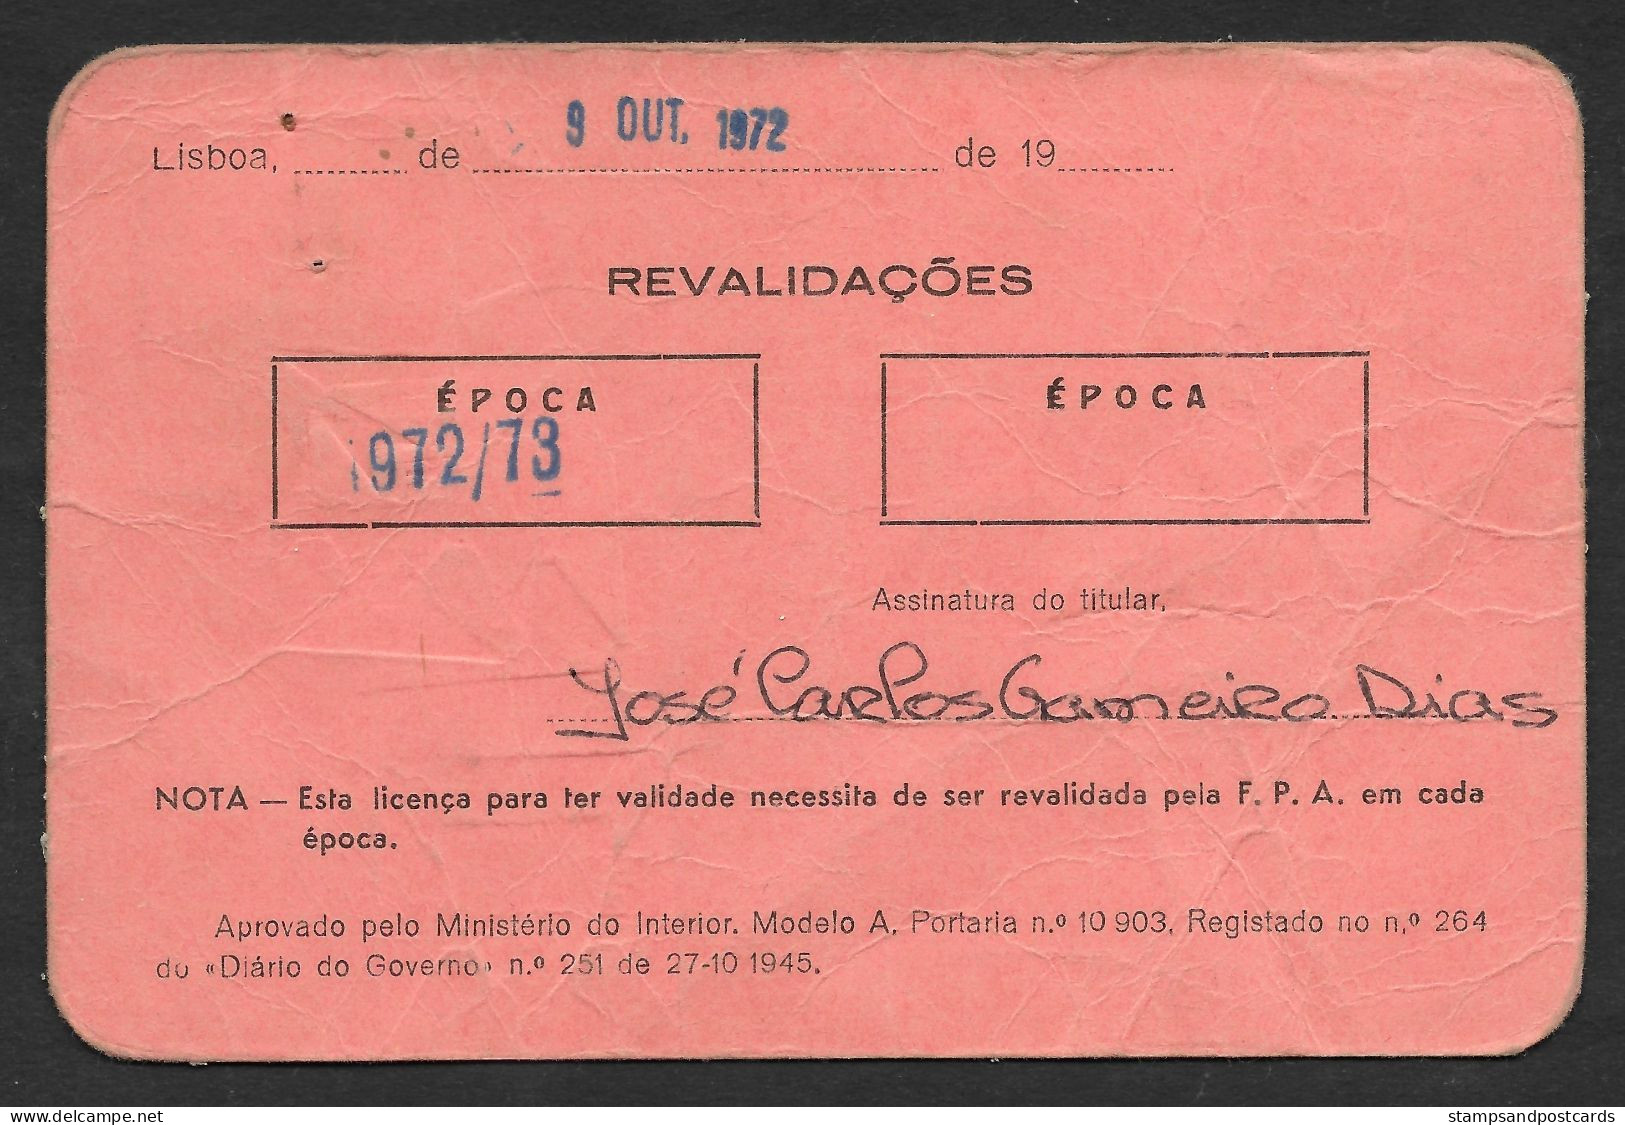 Portugal Carte Jouer Handball Junior SCP Sporting Clube De Portugal 1971 Official ID Card Handball Player - Balonmano